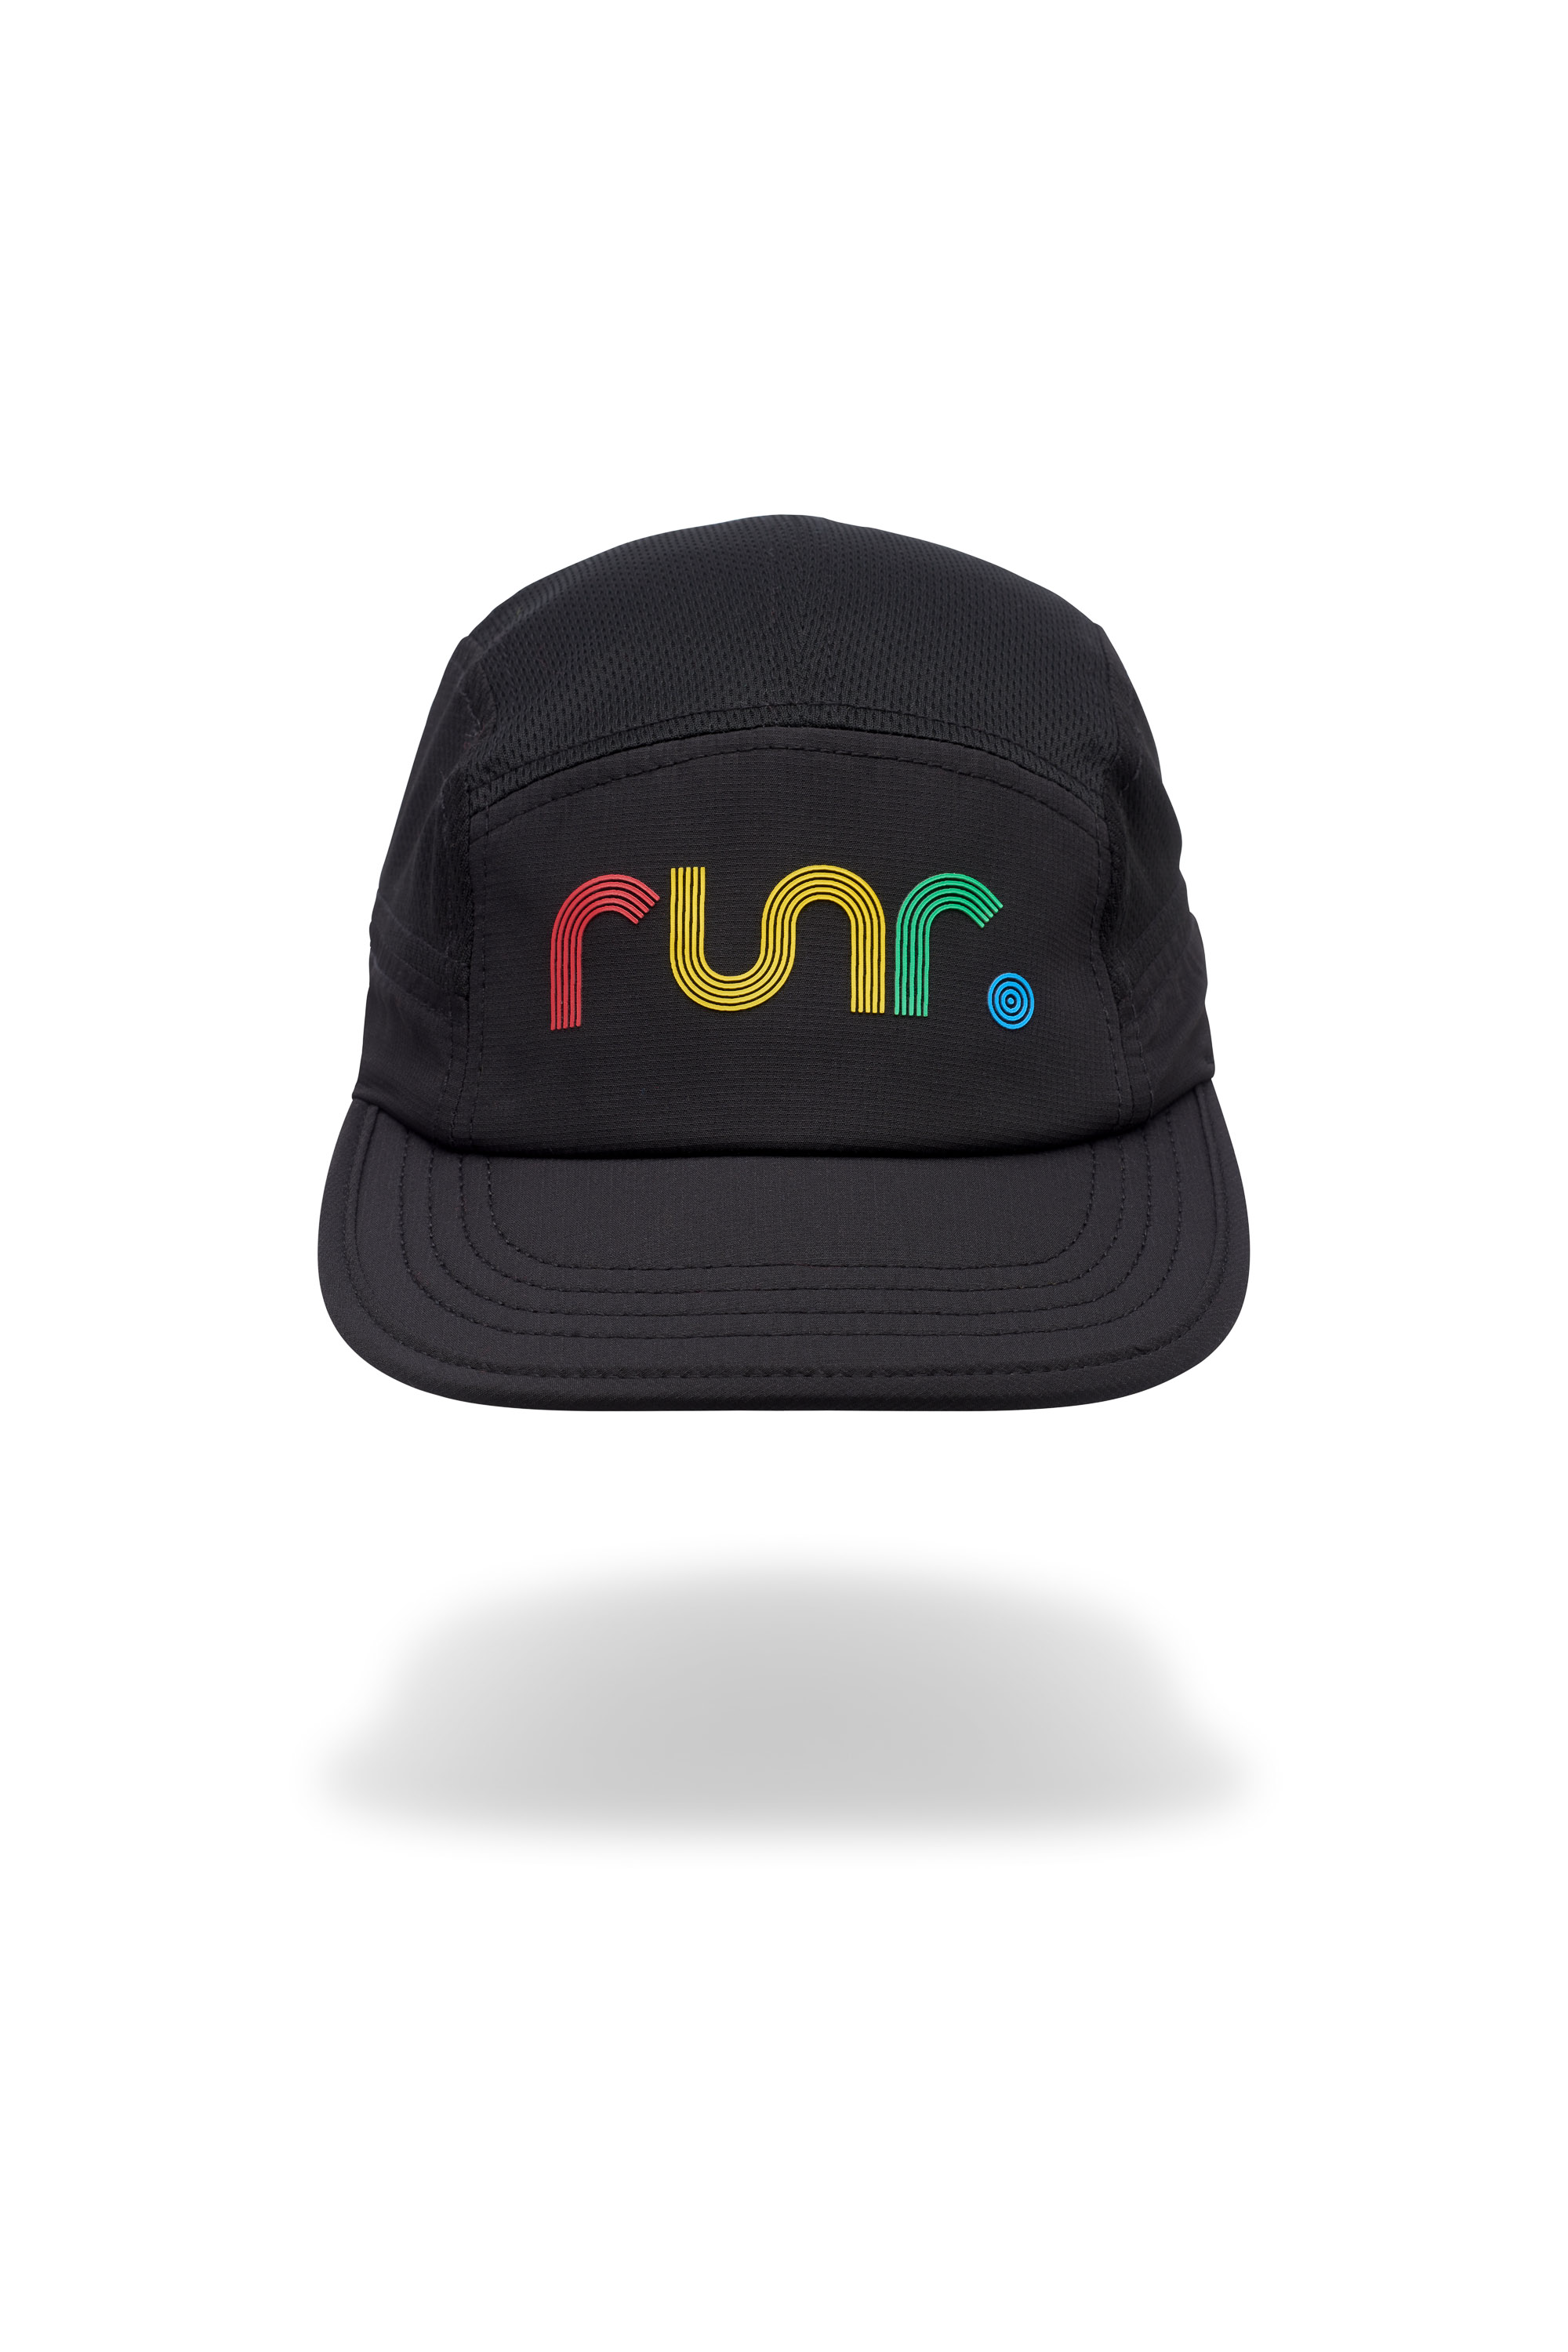 Seoul & 80's Runr Running Hat Bundle